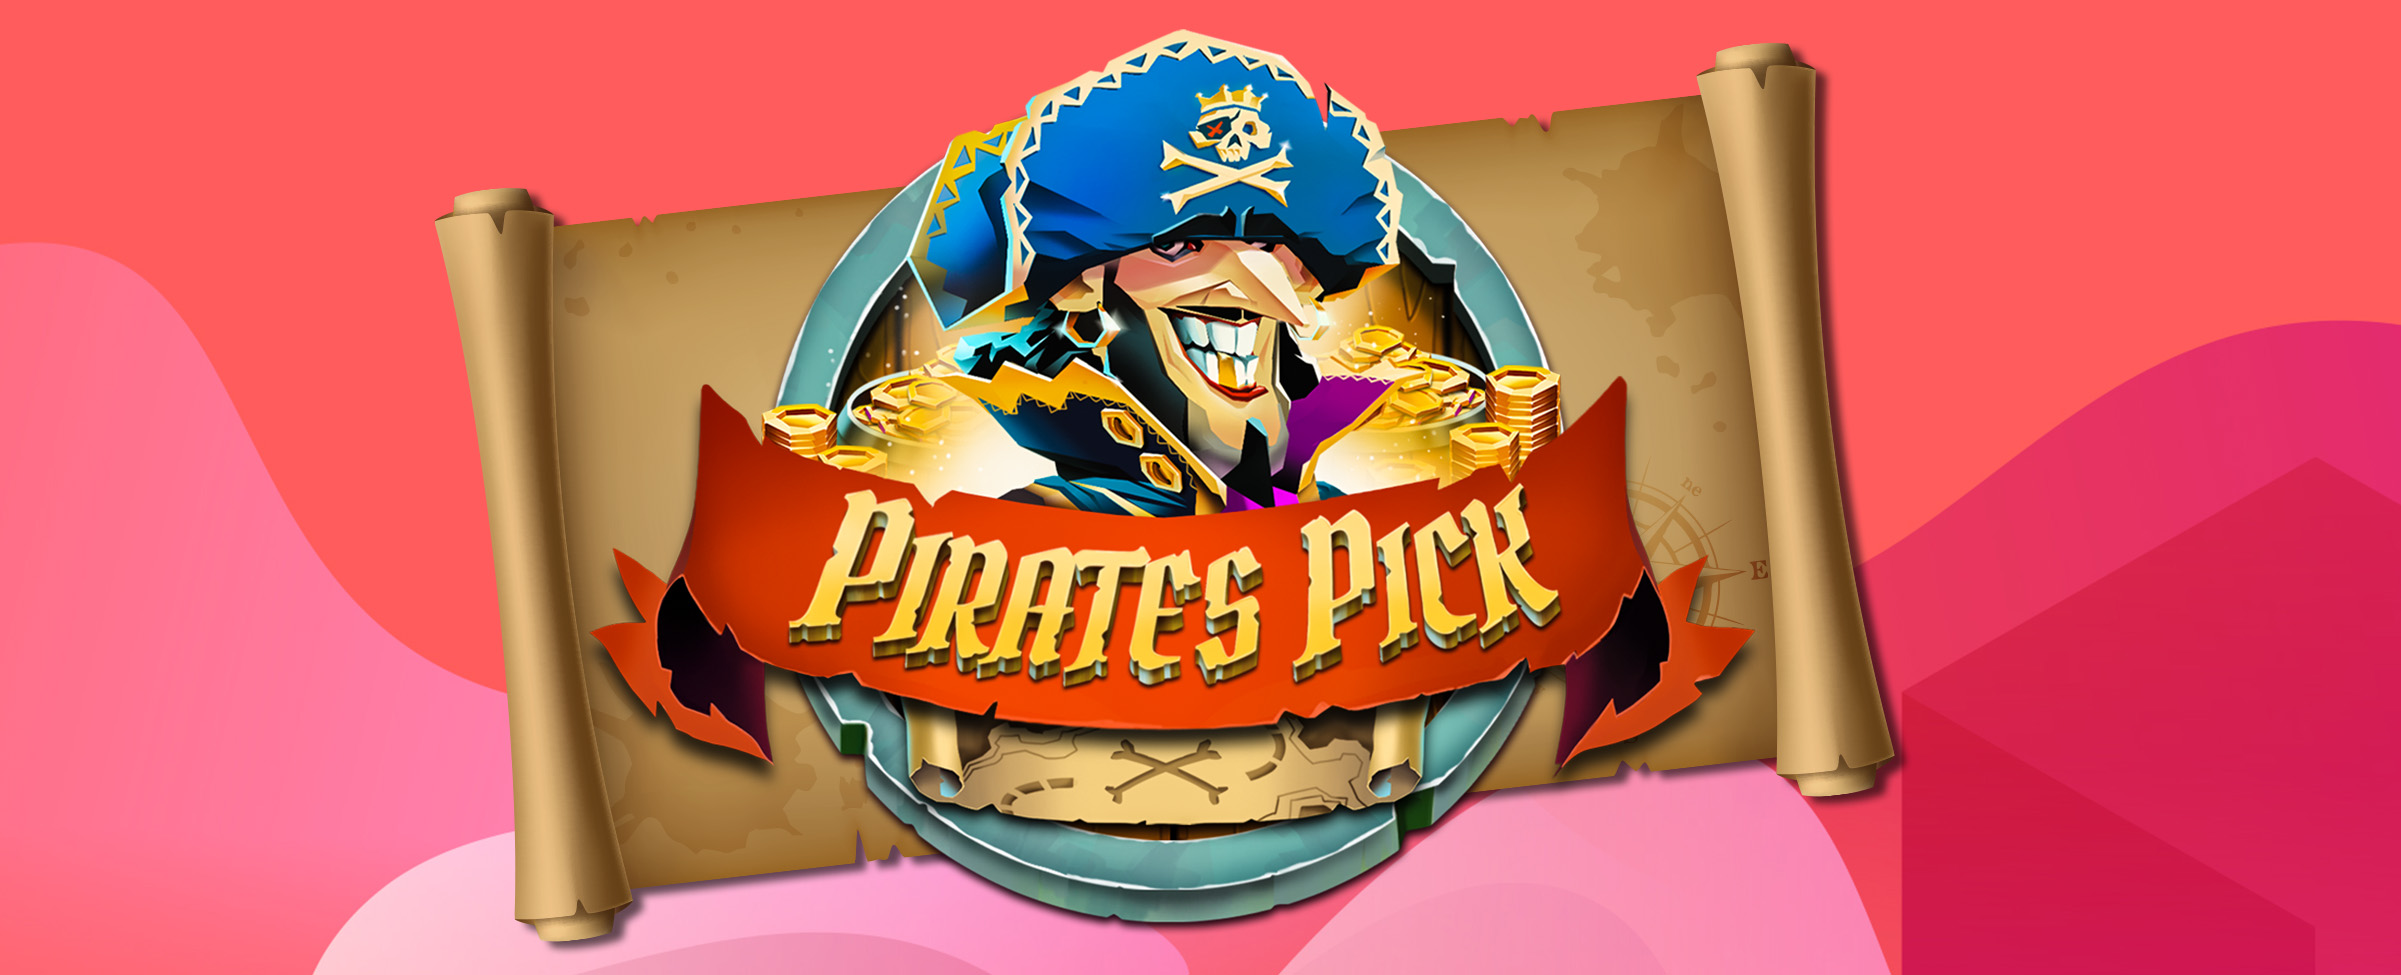 Pirate’s Pick online slot logo at SlotsLV.